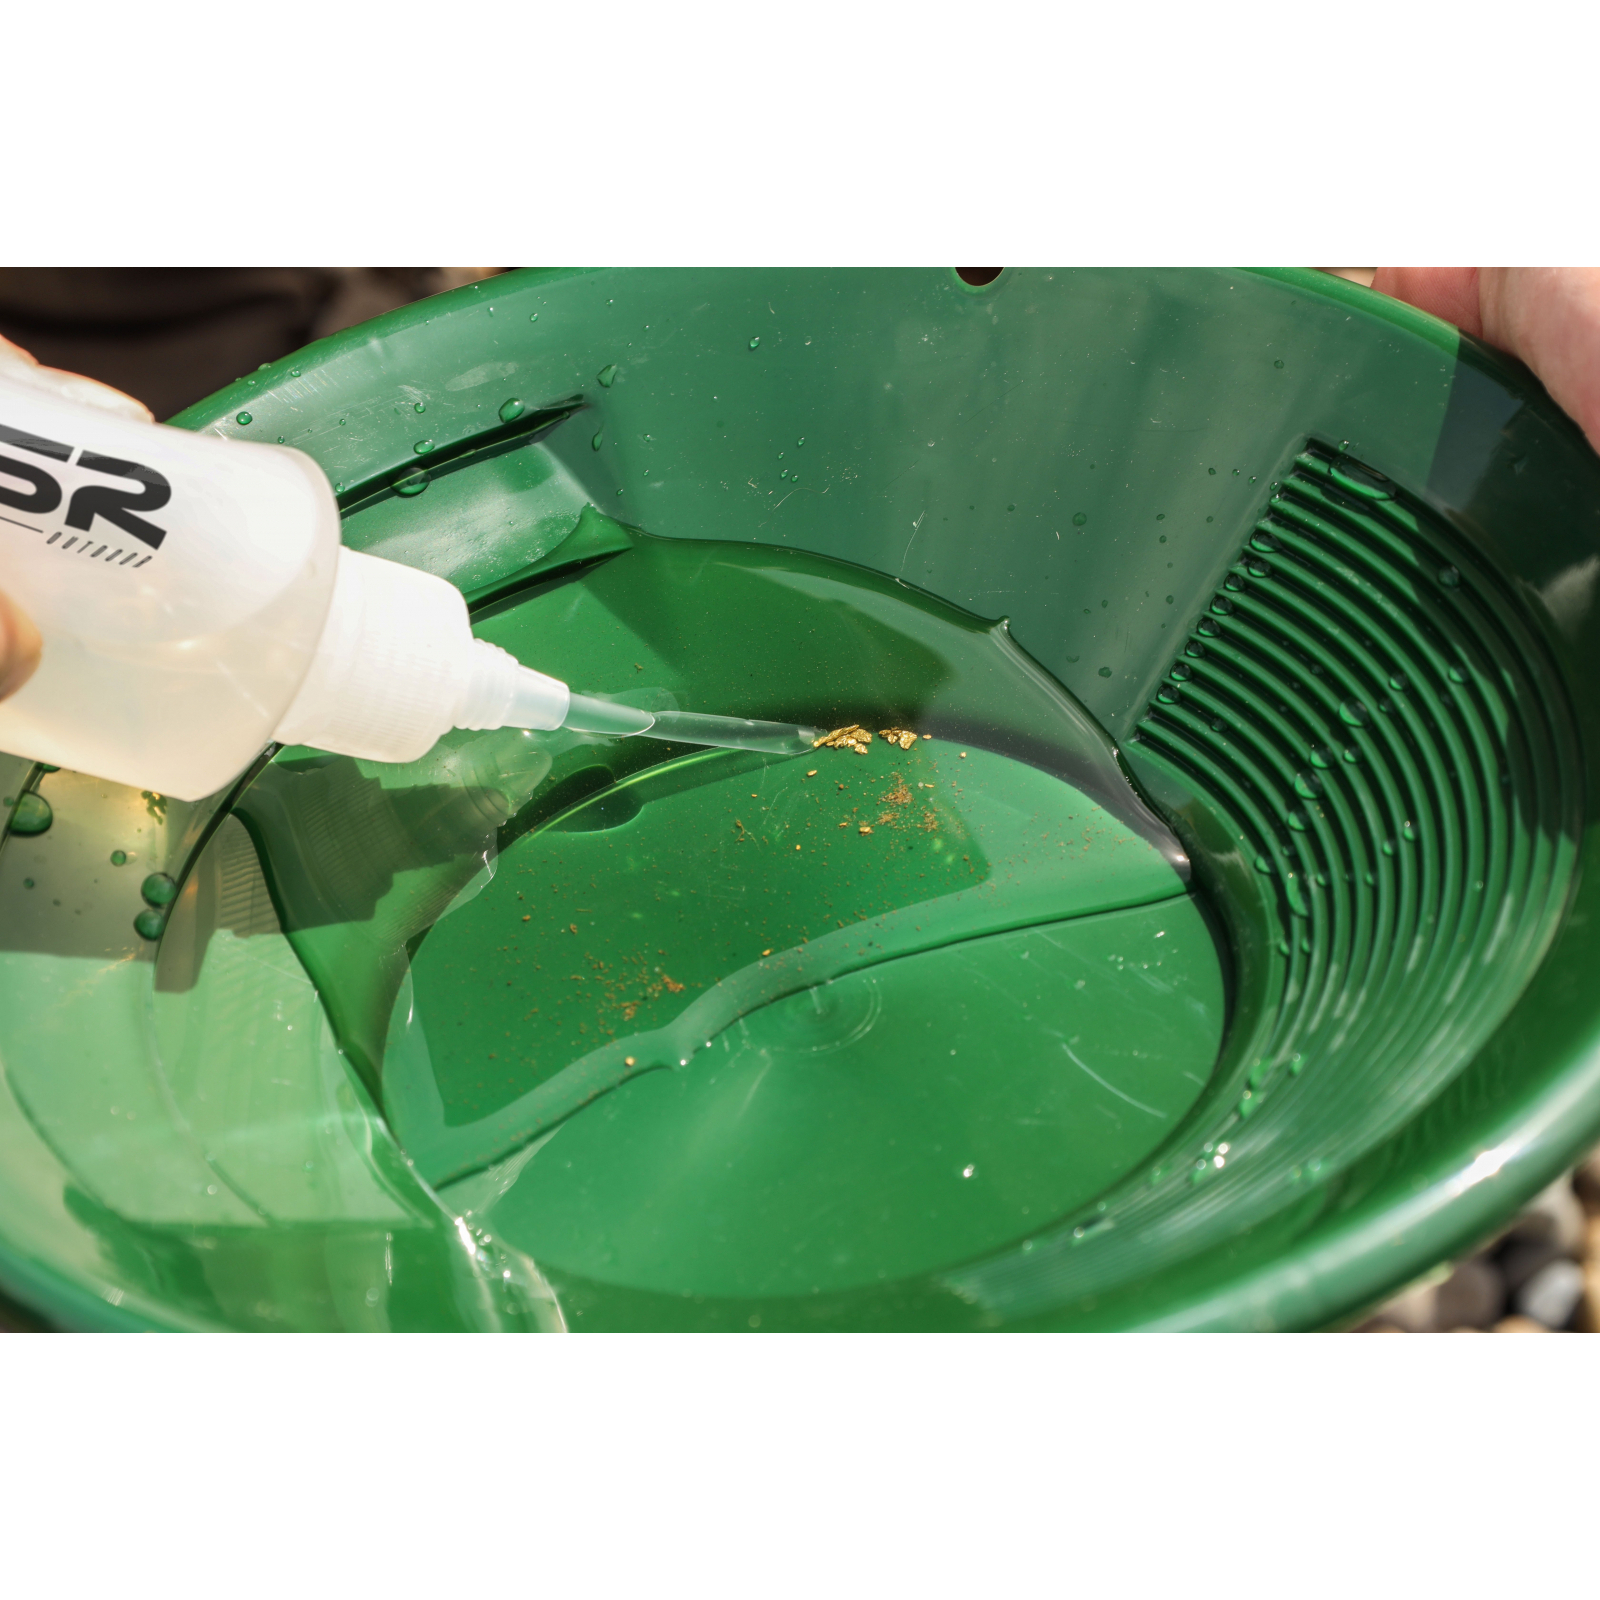 ASR Outdoor Gold Panning Kit Prospecting Tools Classifier Pans Snifter Vials 7pc